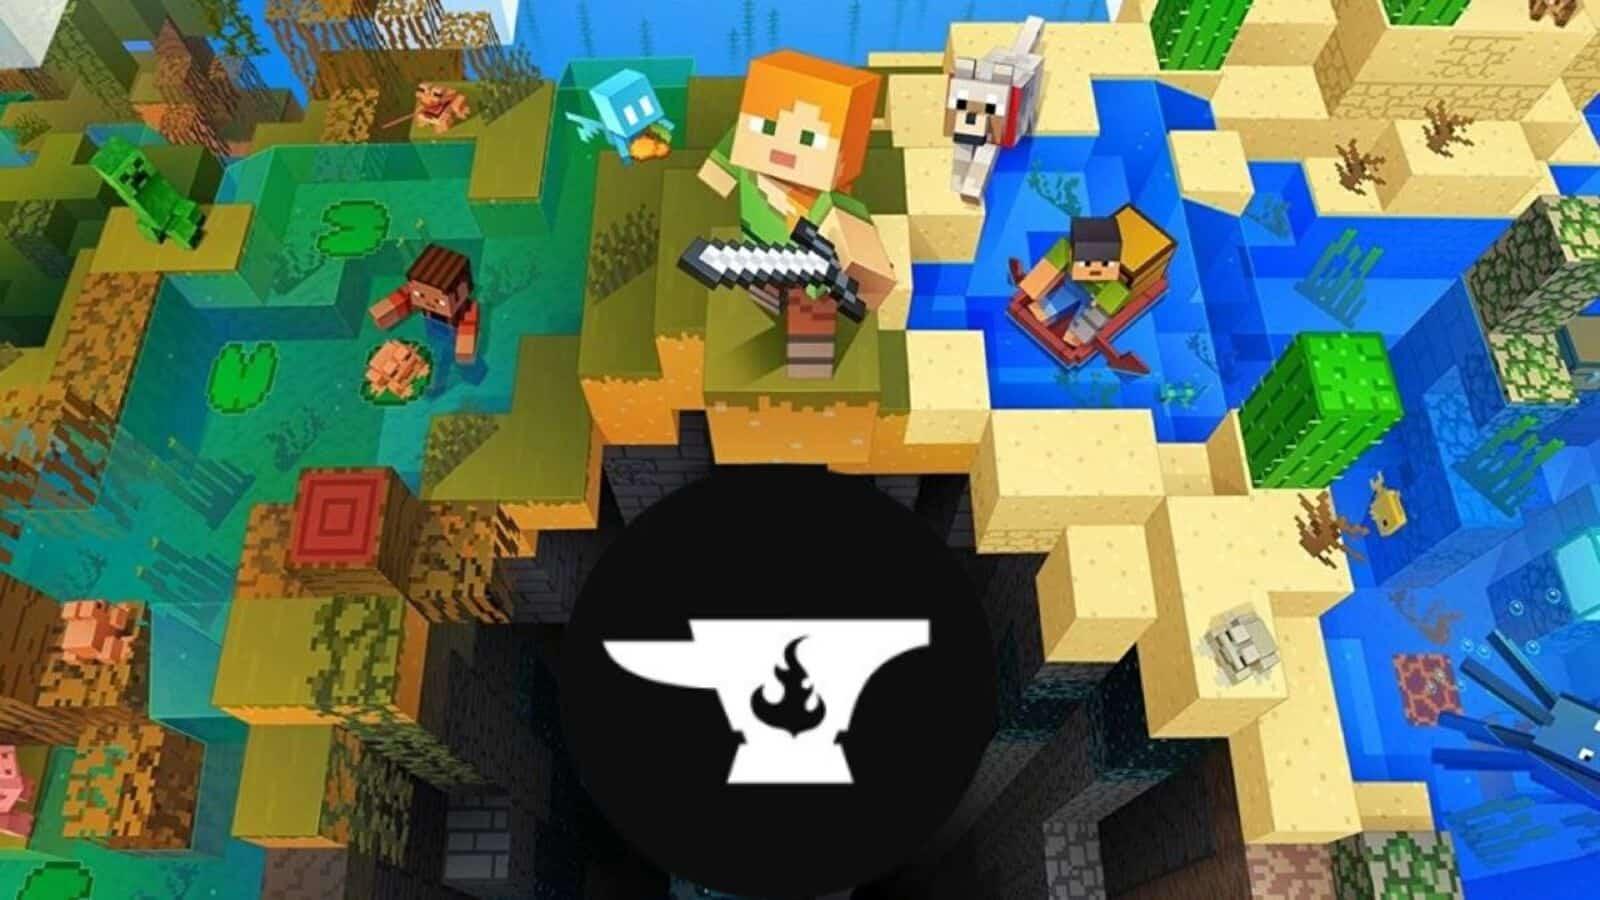 Difficult Raids [FORGE] - Minecraft Mods - CurseForge